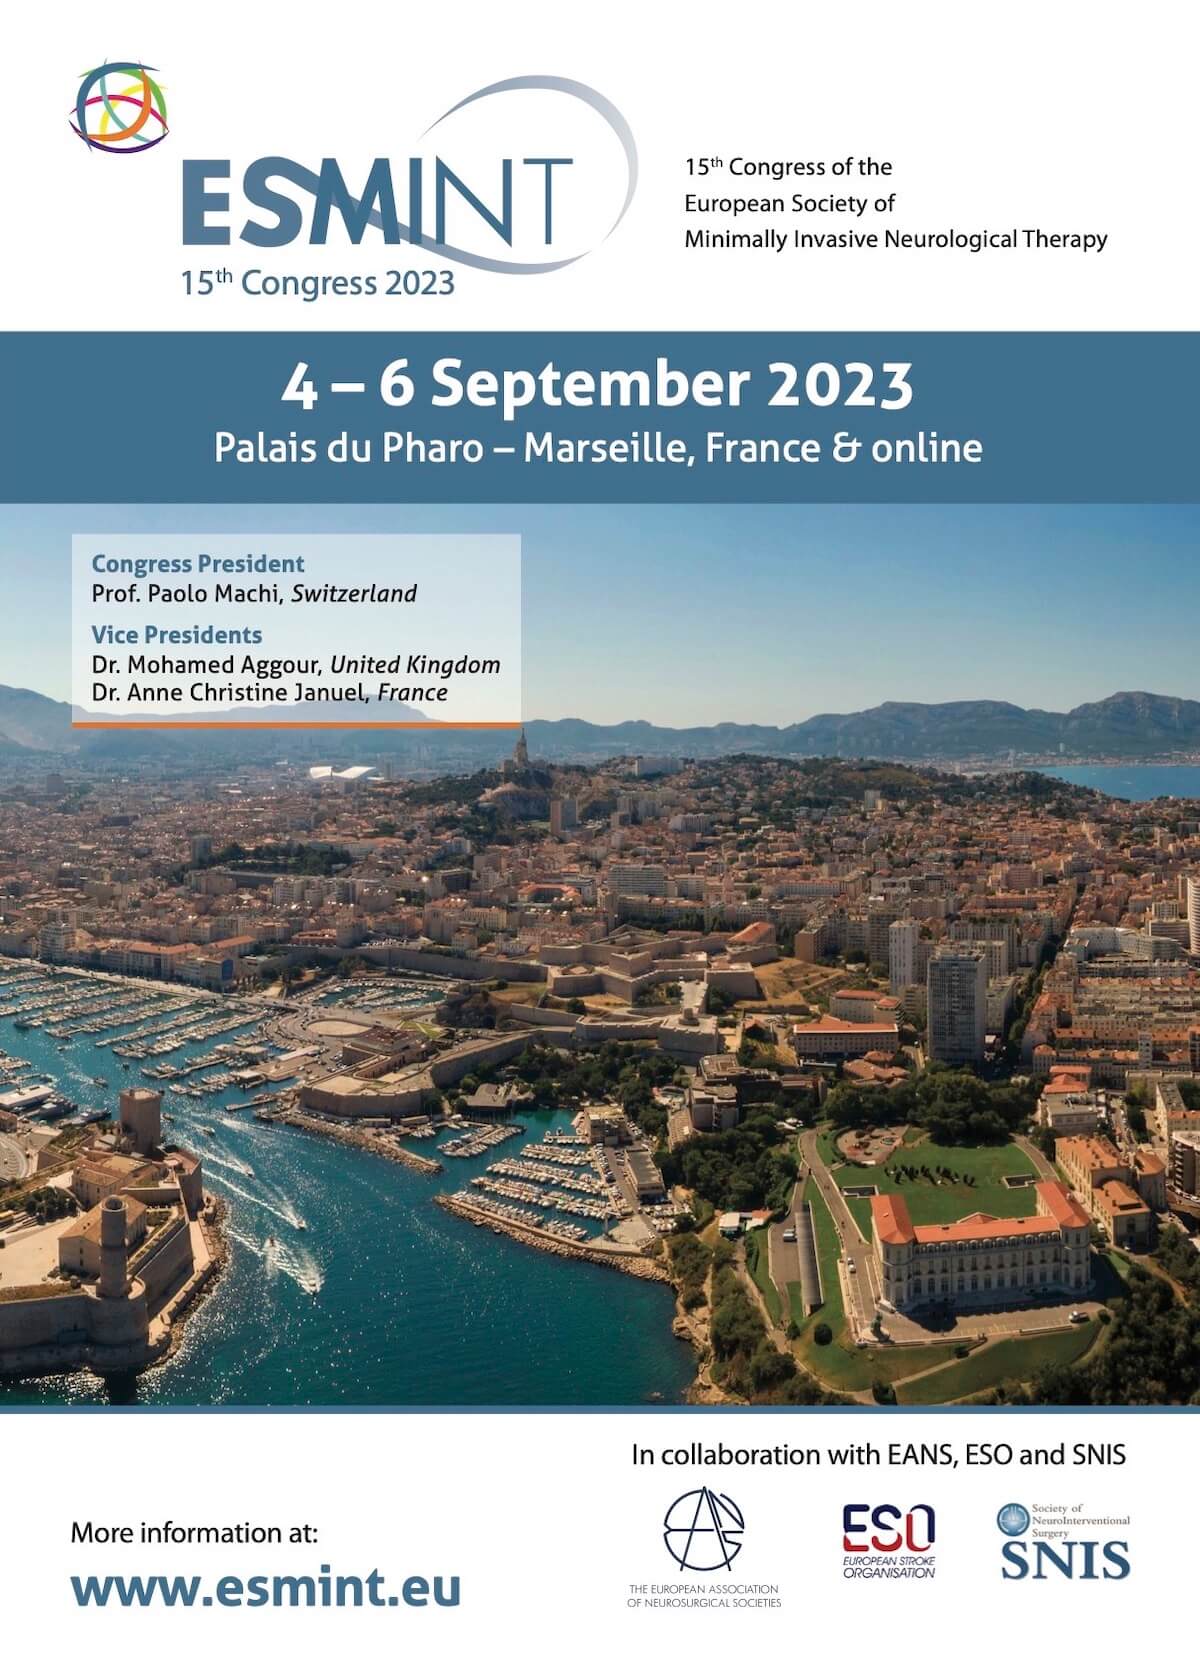 ESMINT 15th Congress 2023, 4-6 September 2023, Palais du Pharo – Marseille, France & online